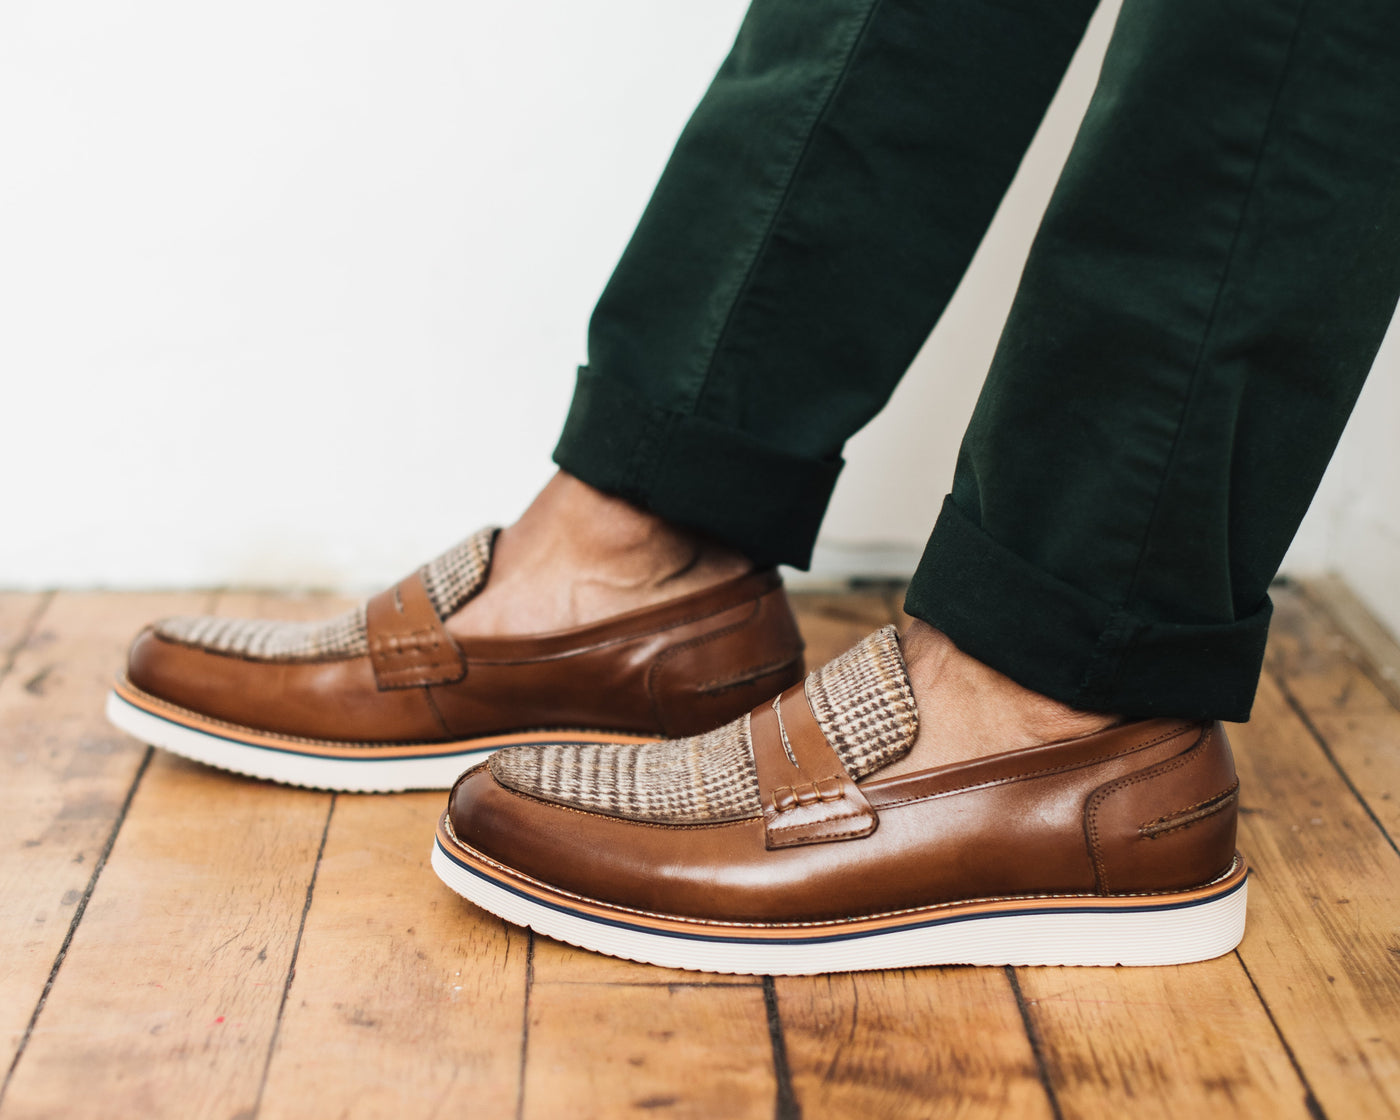 Men's spring shoes - 5 easter classy outfit ideas for men - Marc Nolan